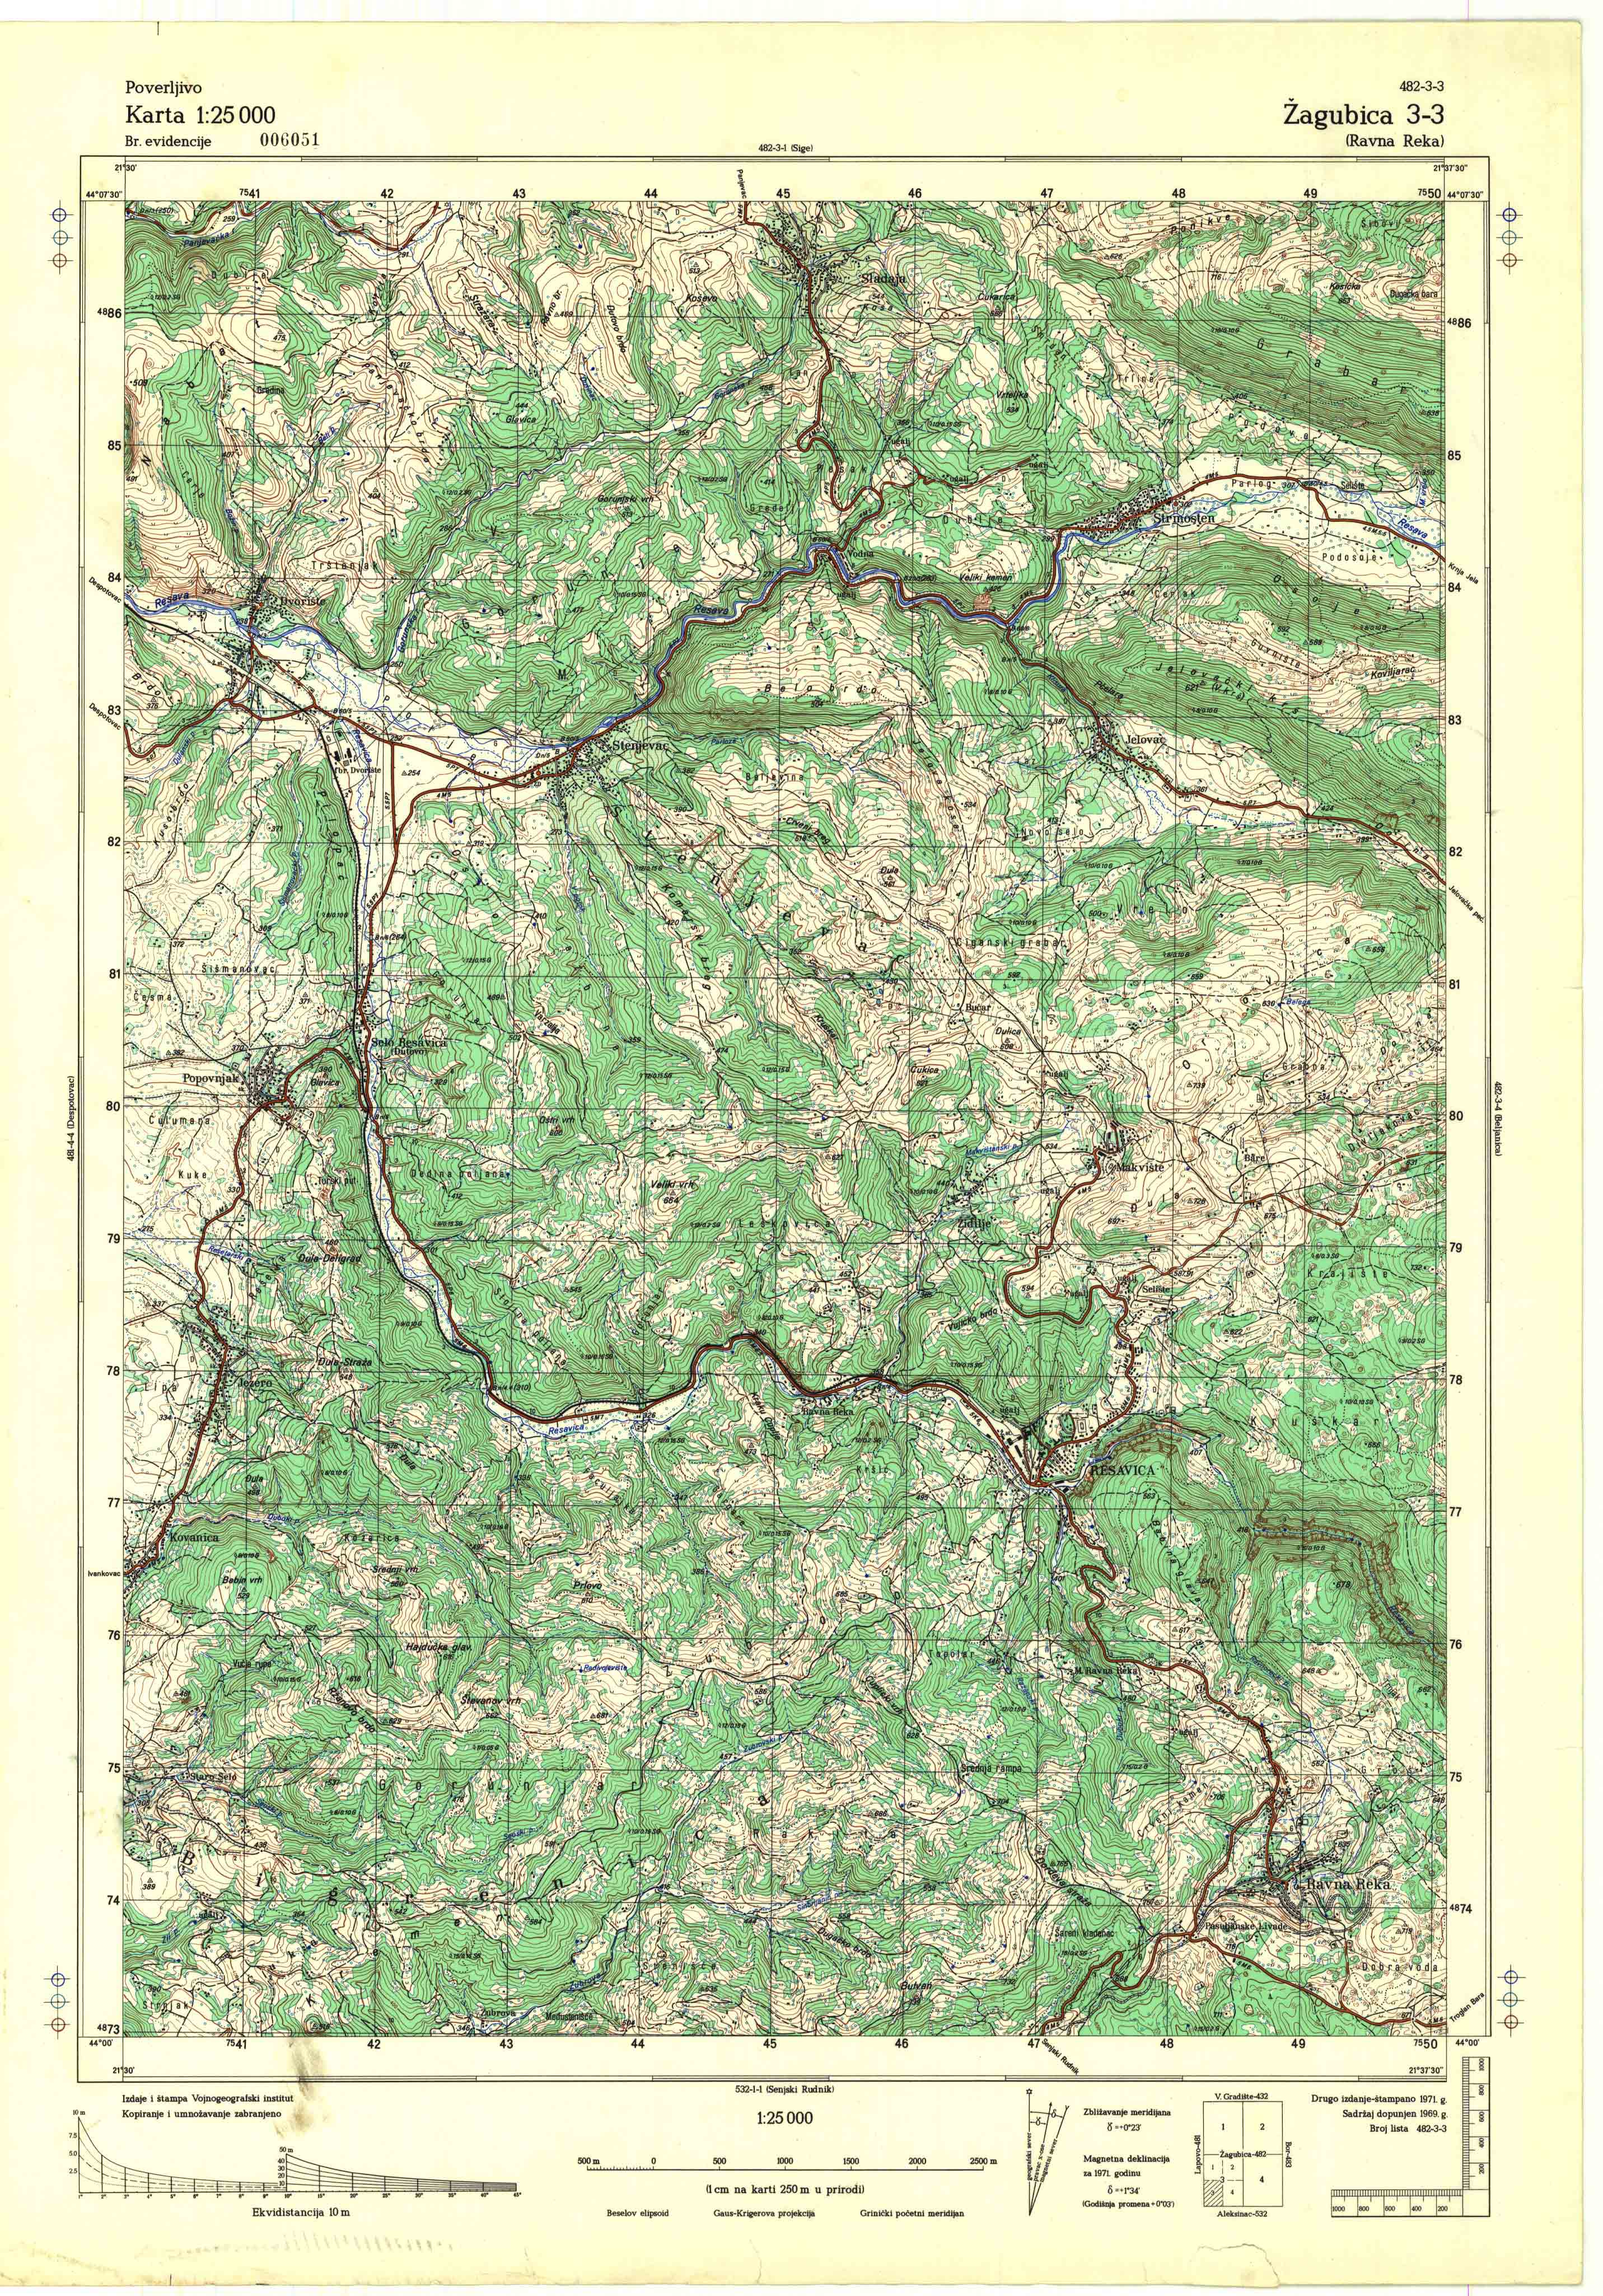  topografska karta srbije 25000 JNA  Zagubica